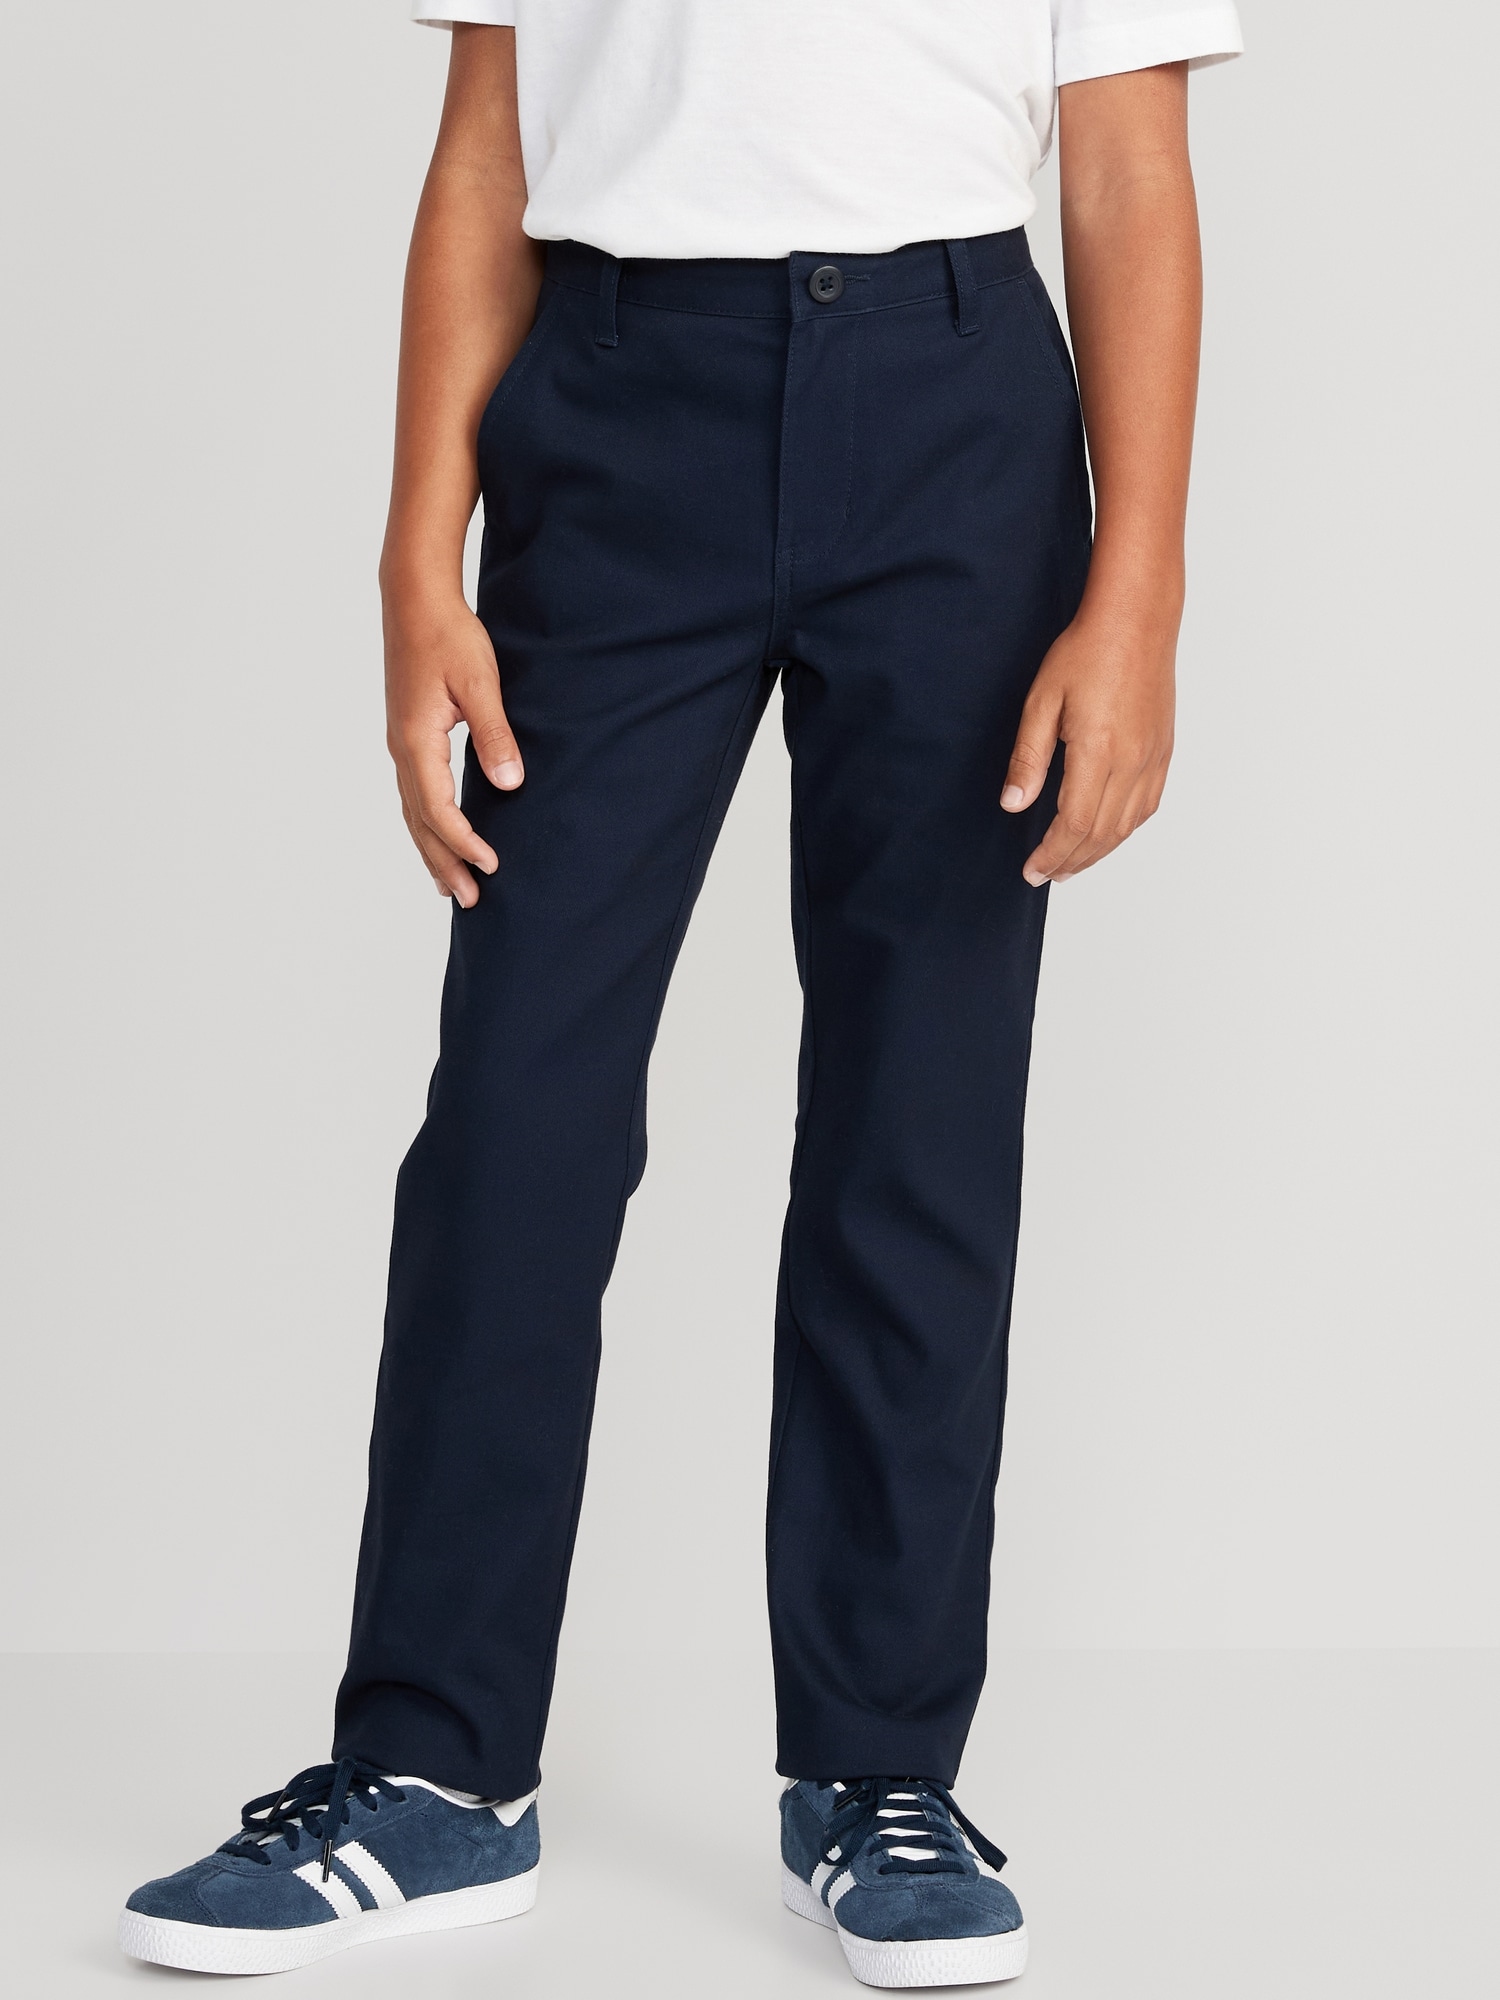 School Uniform Bootcut Pants for Girls | Old Navy